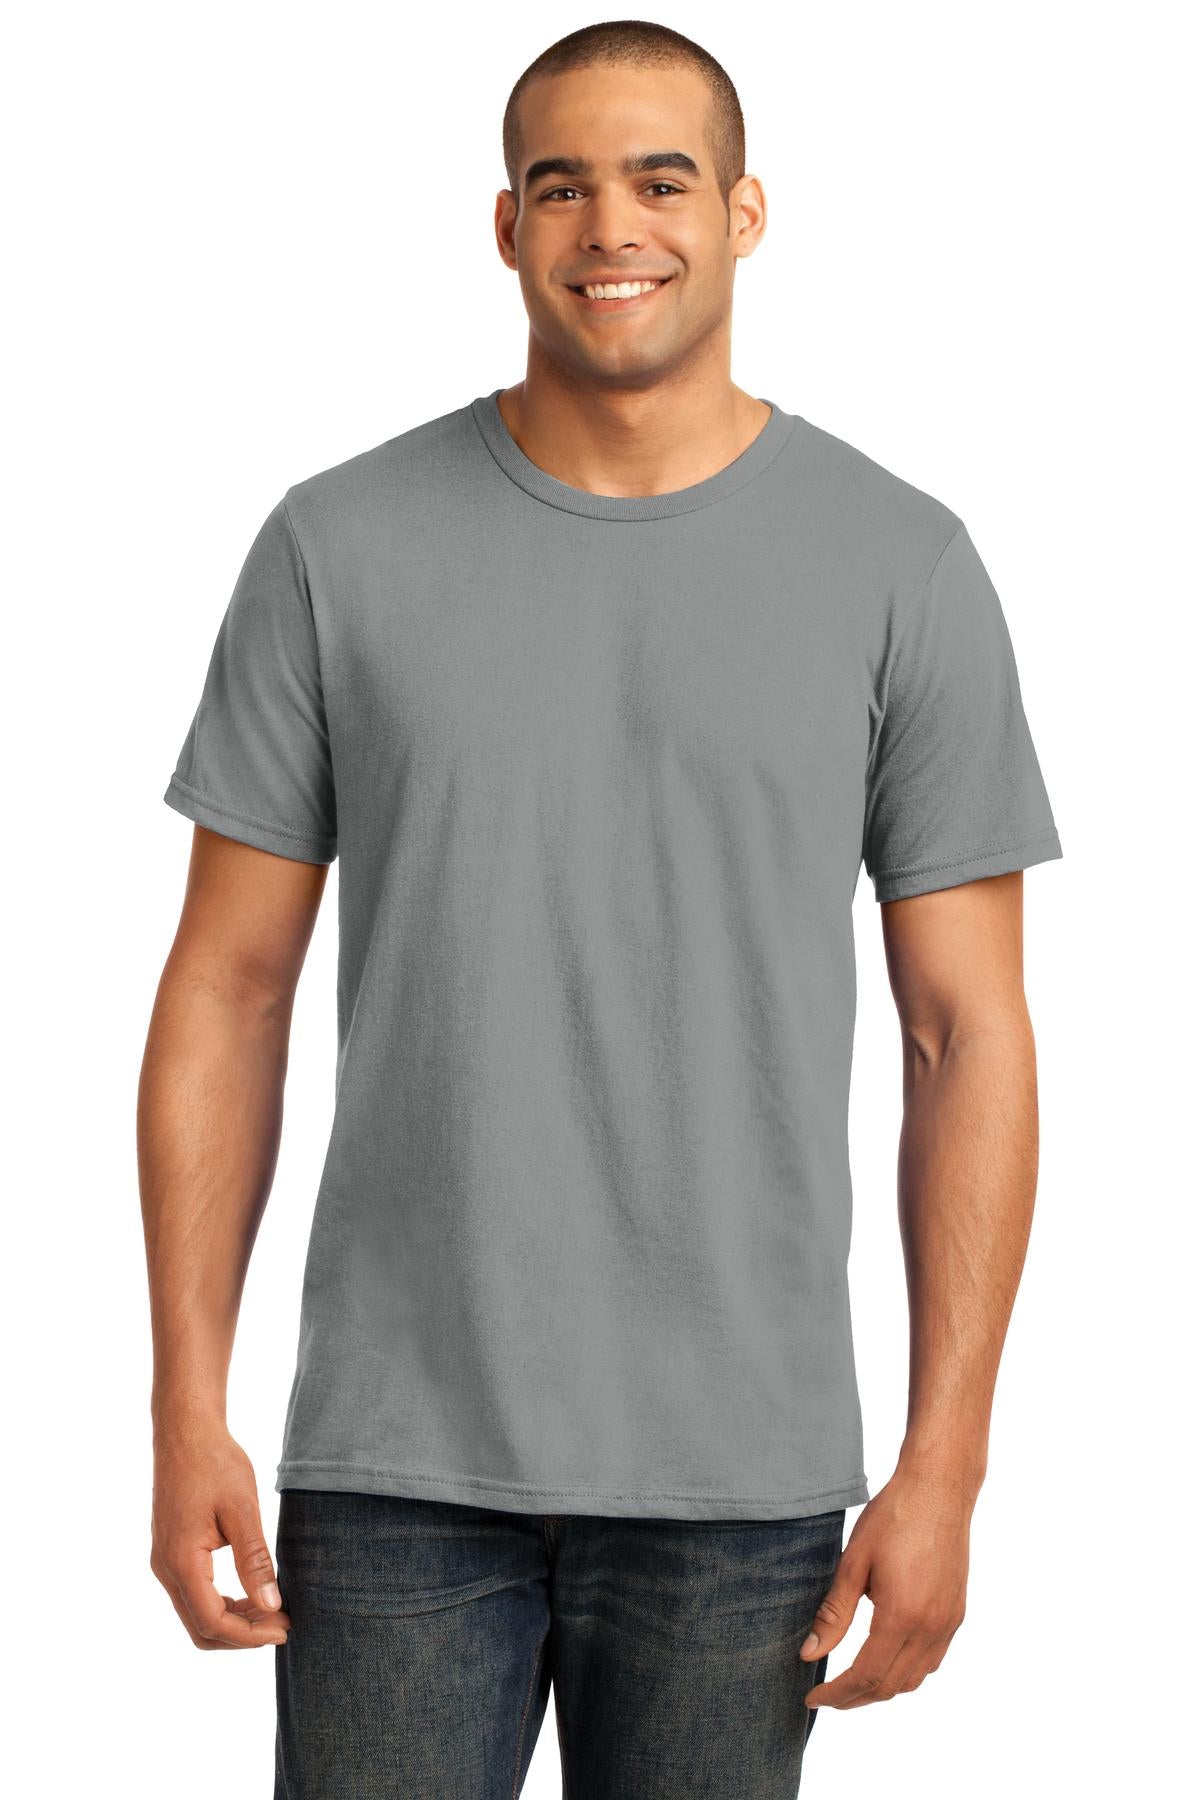 Anvil® 100% Combed Ring Spun Cotton T-Shirt. 980